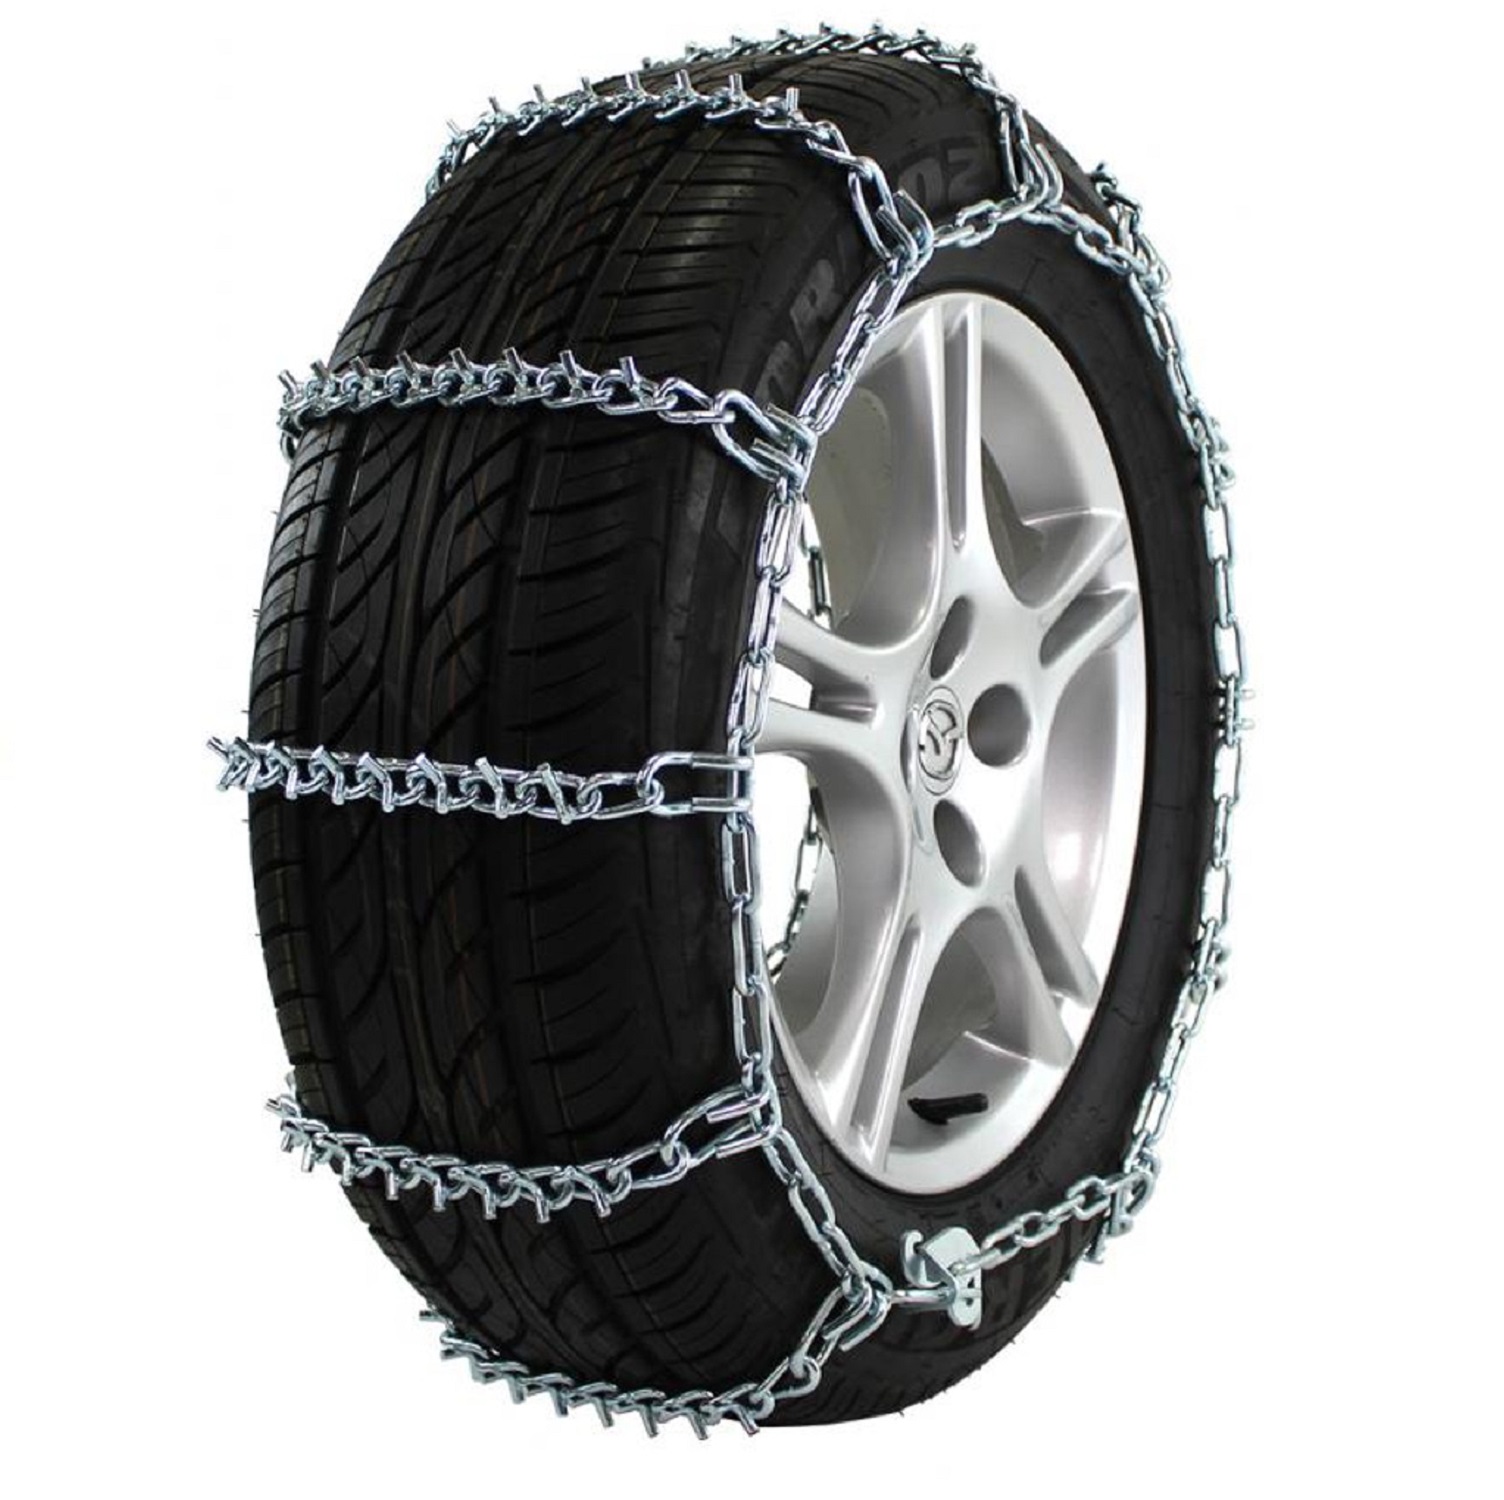 V-Bar Passenger Vehicle Tire Chains